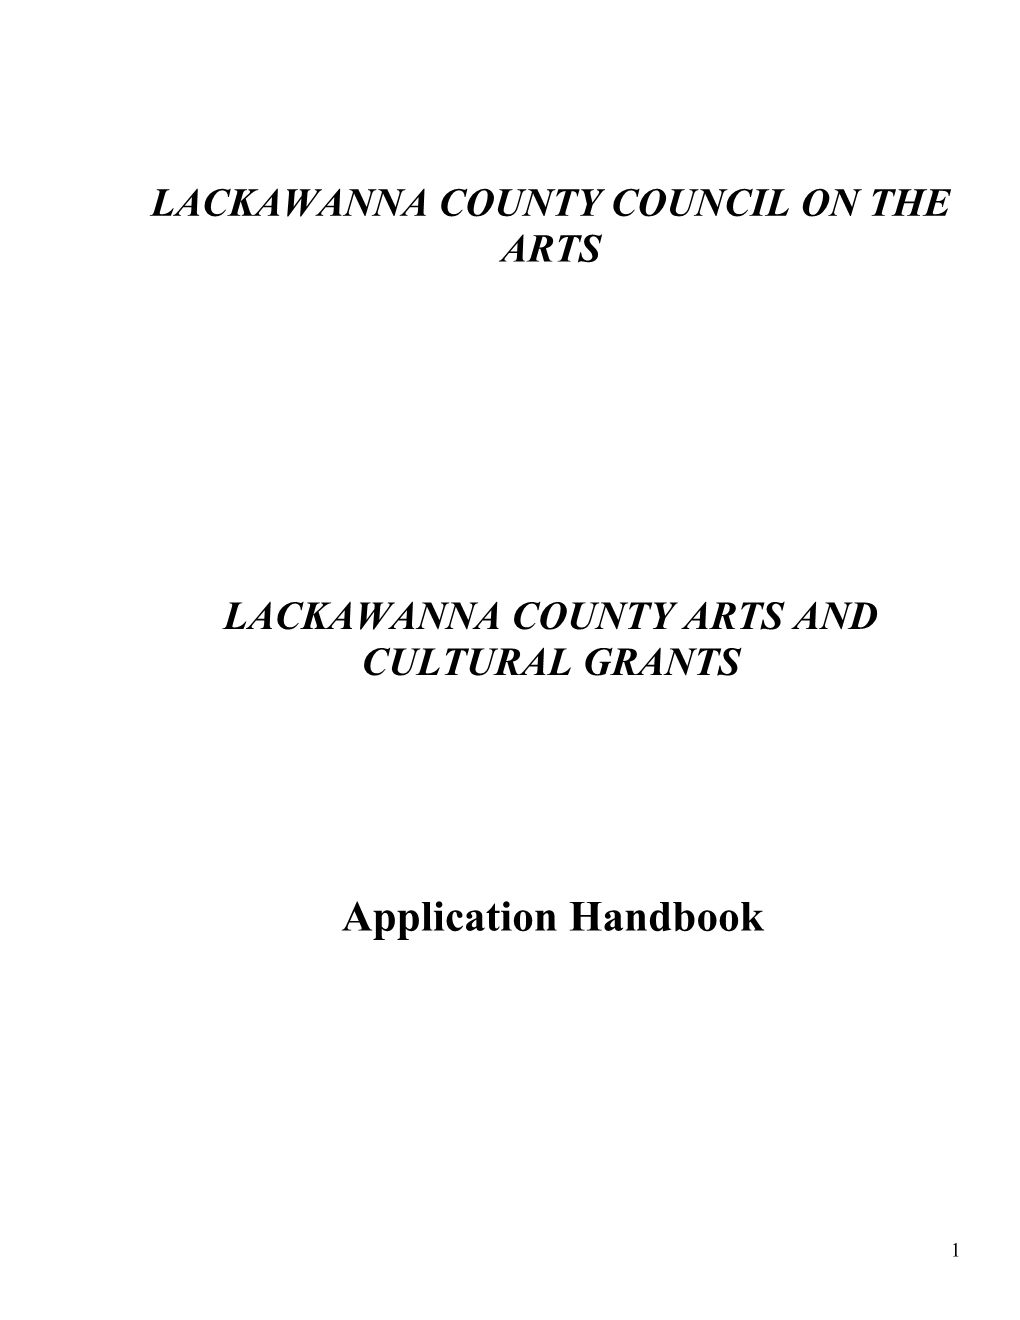 Lackawanna County Council on the Arts